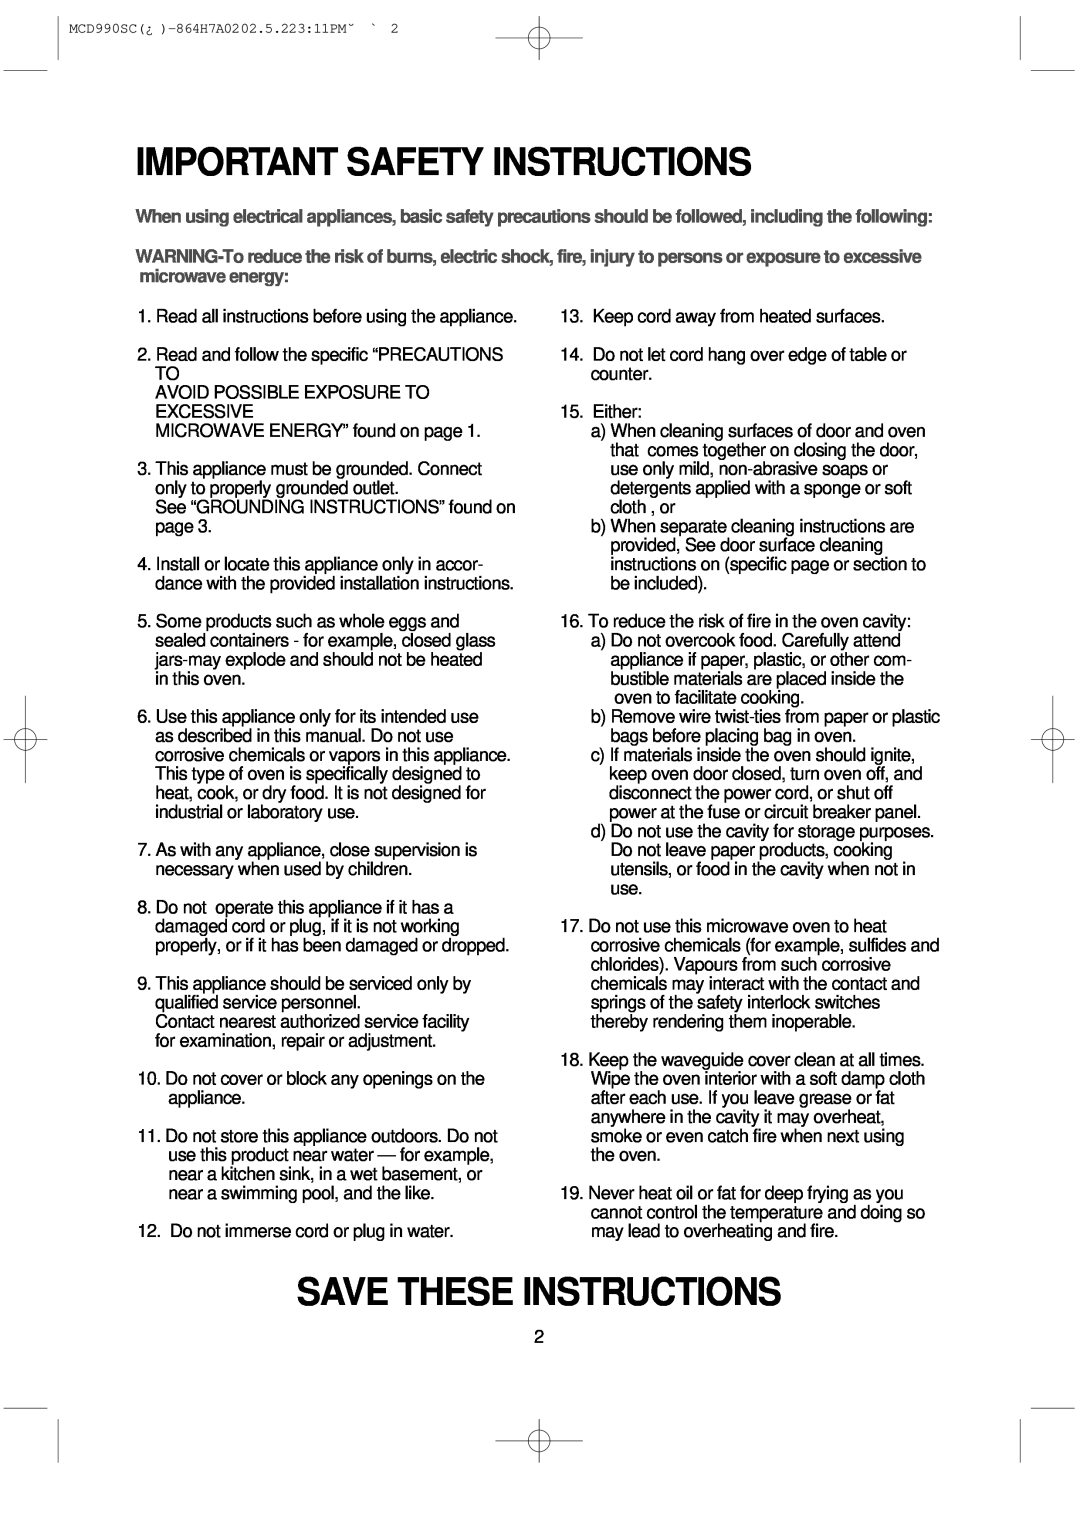 Magic Chef MCD990SC instruction manual Important Safety Instructions, Save These Instructions 